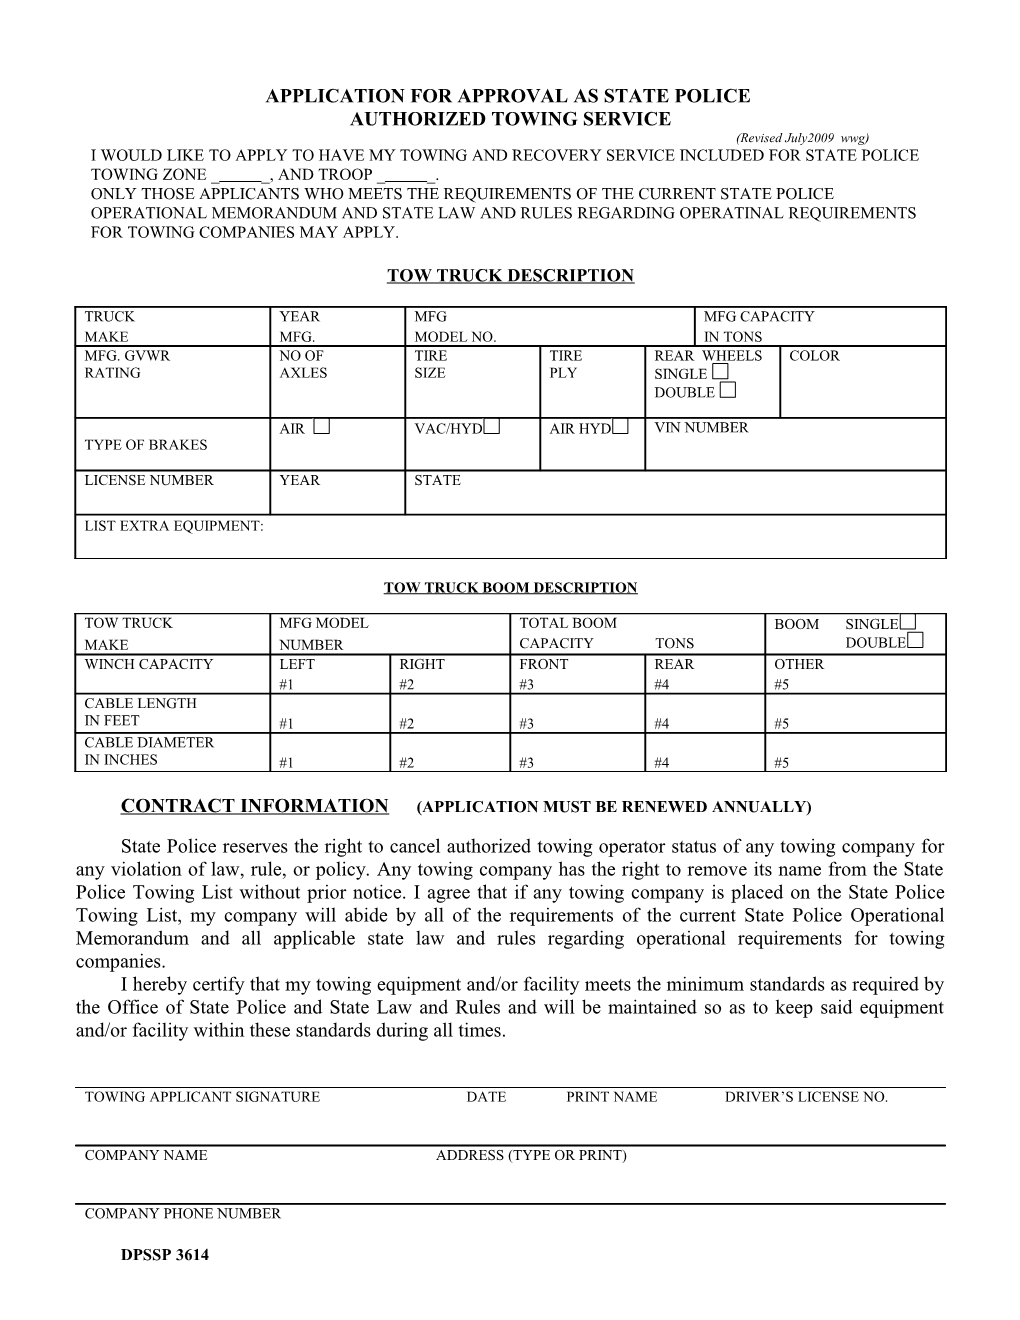 DPSSP 3614 Tow Truck Application Form